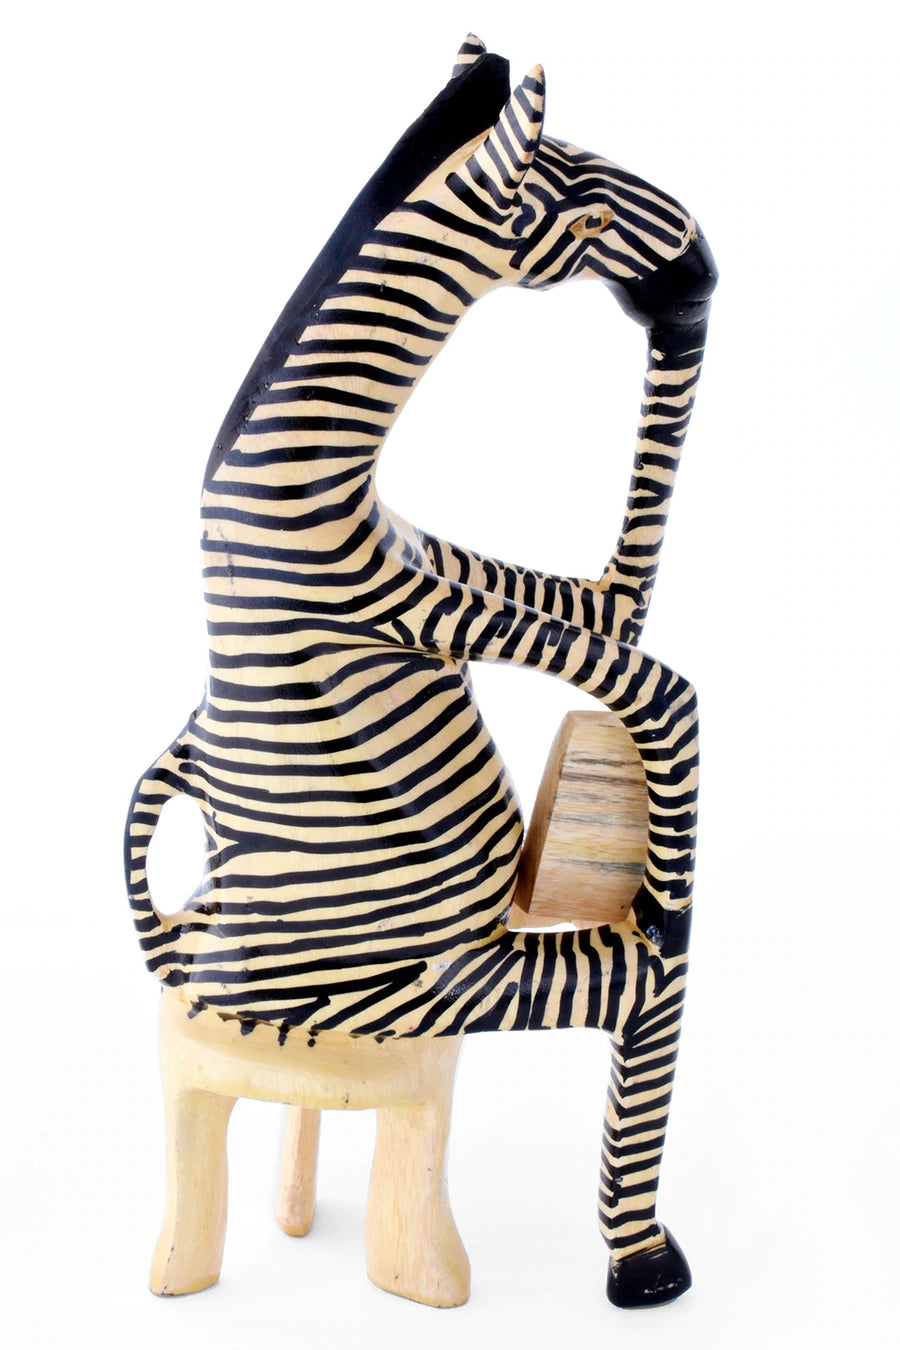 Hand-Painted Wood Reading Zebra Teacher Sculptures